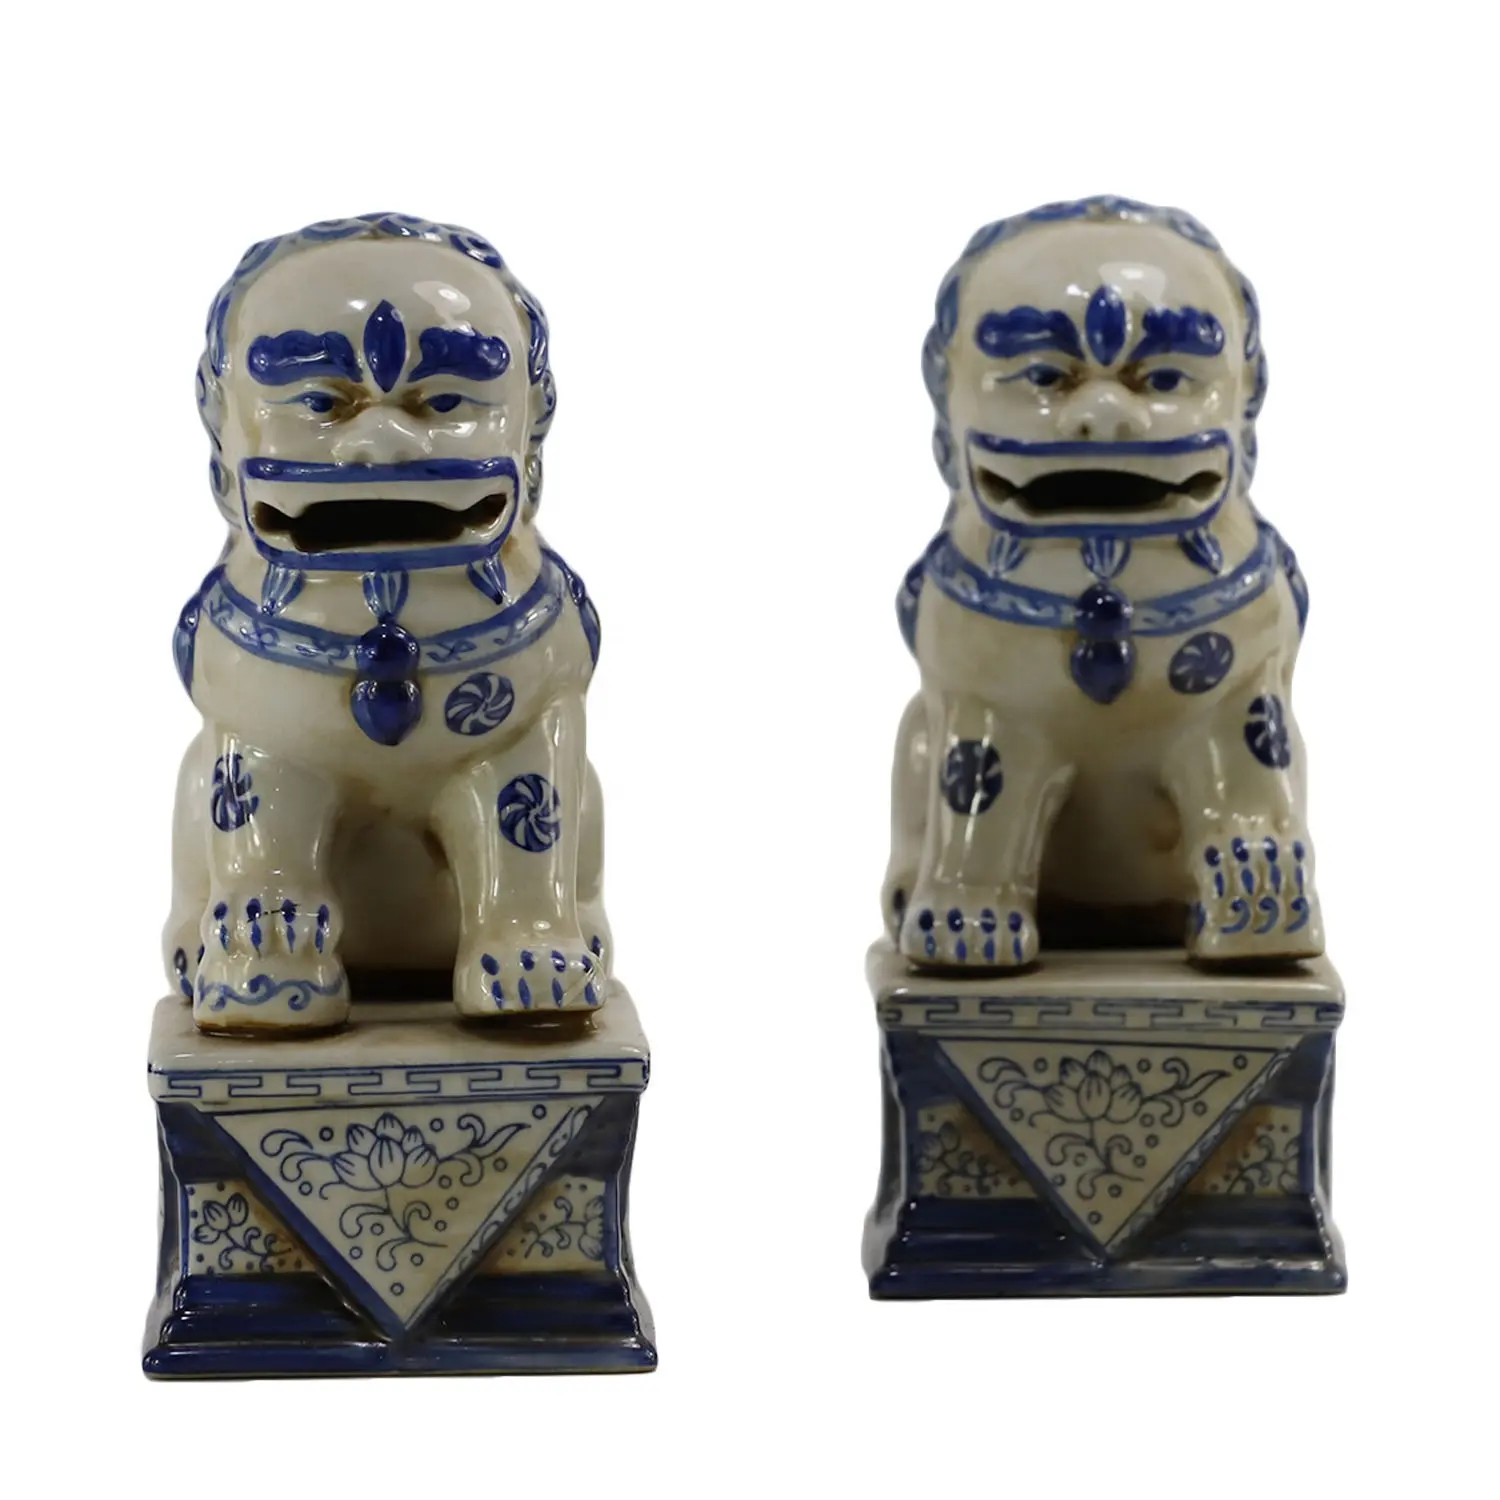 Synwish Custom Staffordshire Reproduktion König Charles Spaniel blau und weiß farbe antike Keramik Hund ornament skulptur